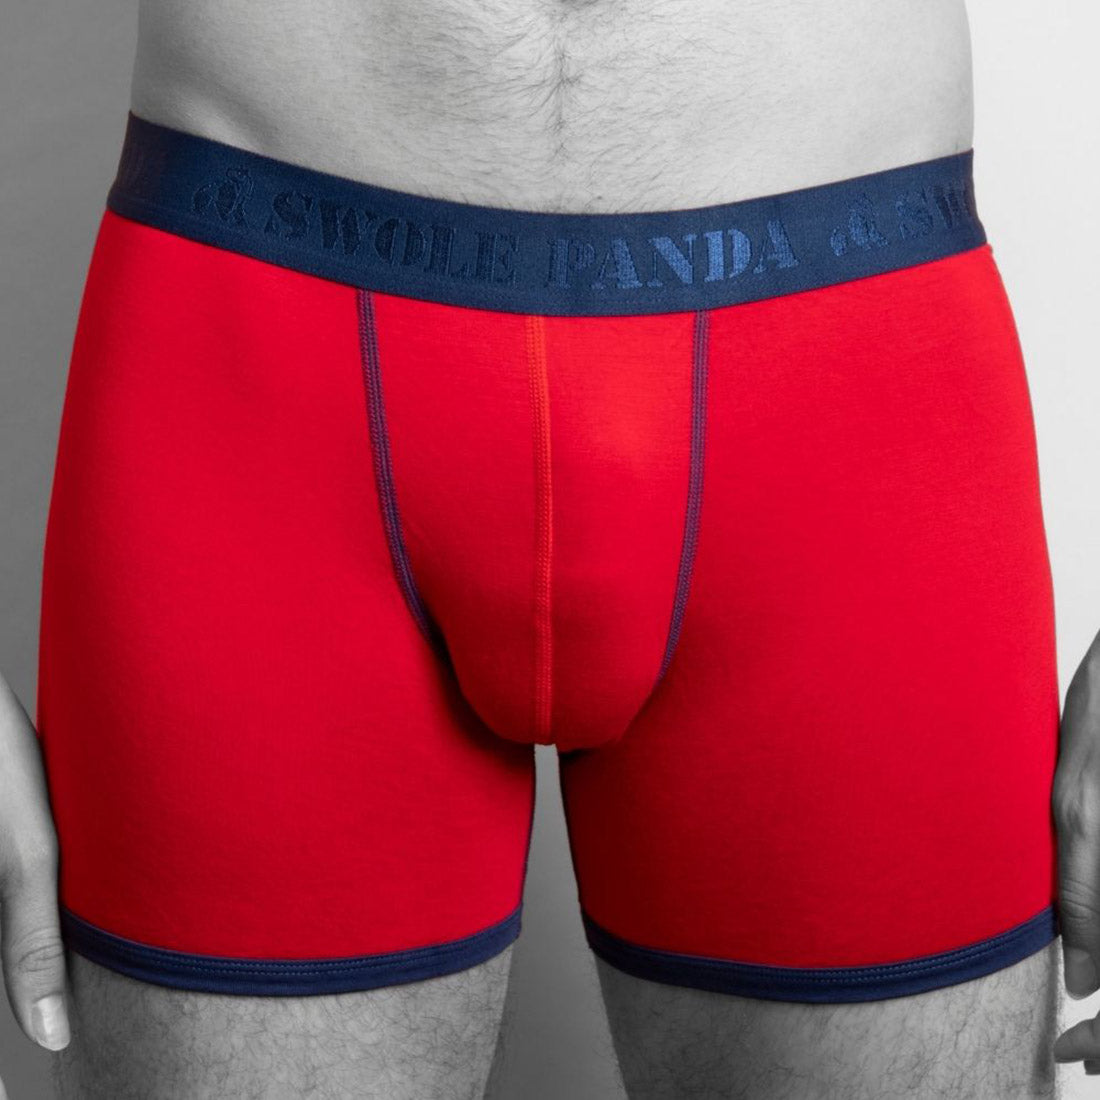 underwear-bamboo-boxers-red-blue-band-1_0f2dff27-b3a6-4de0-95a7-b1a17440c10f.jpg